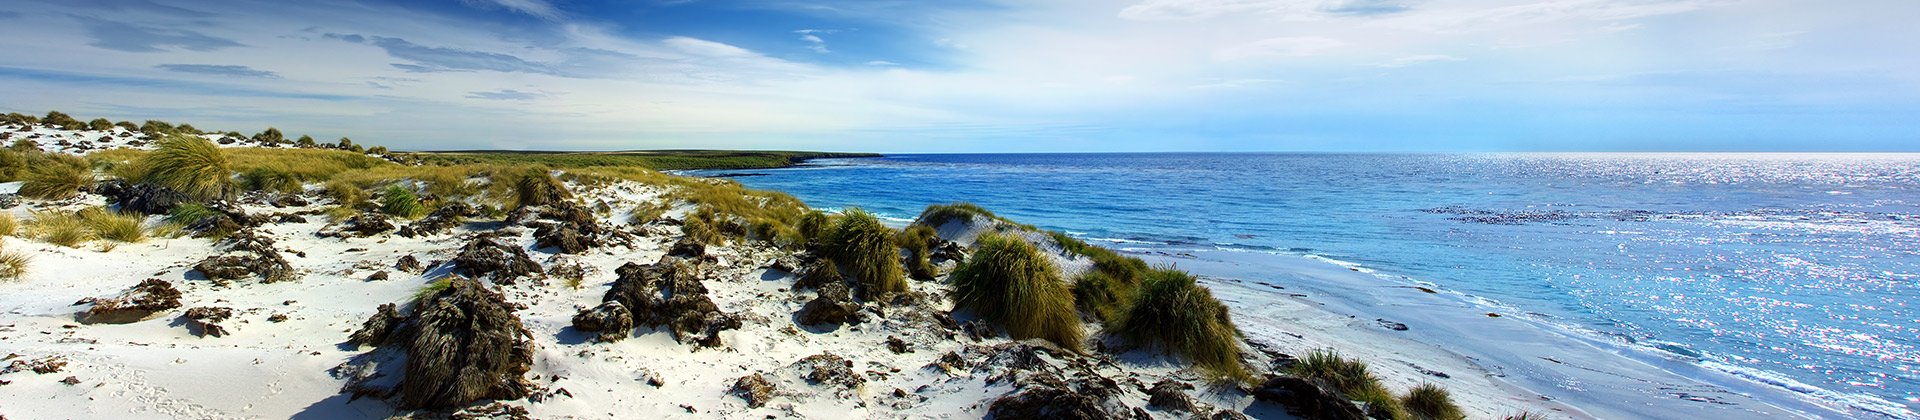 Falkland Islands Coastline